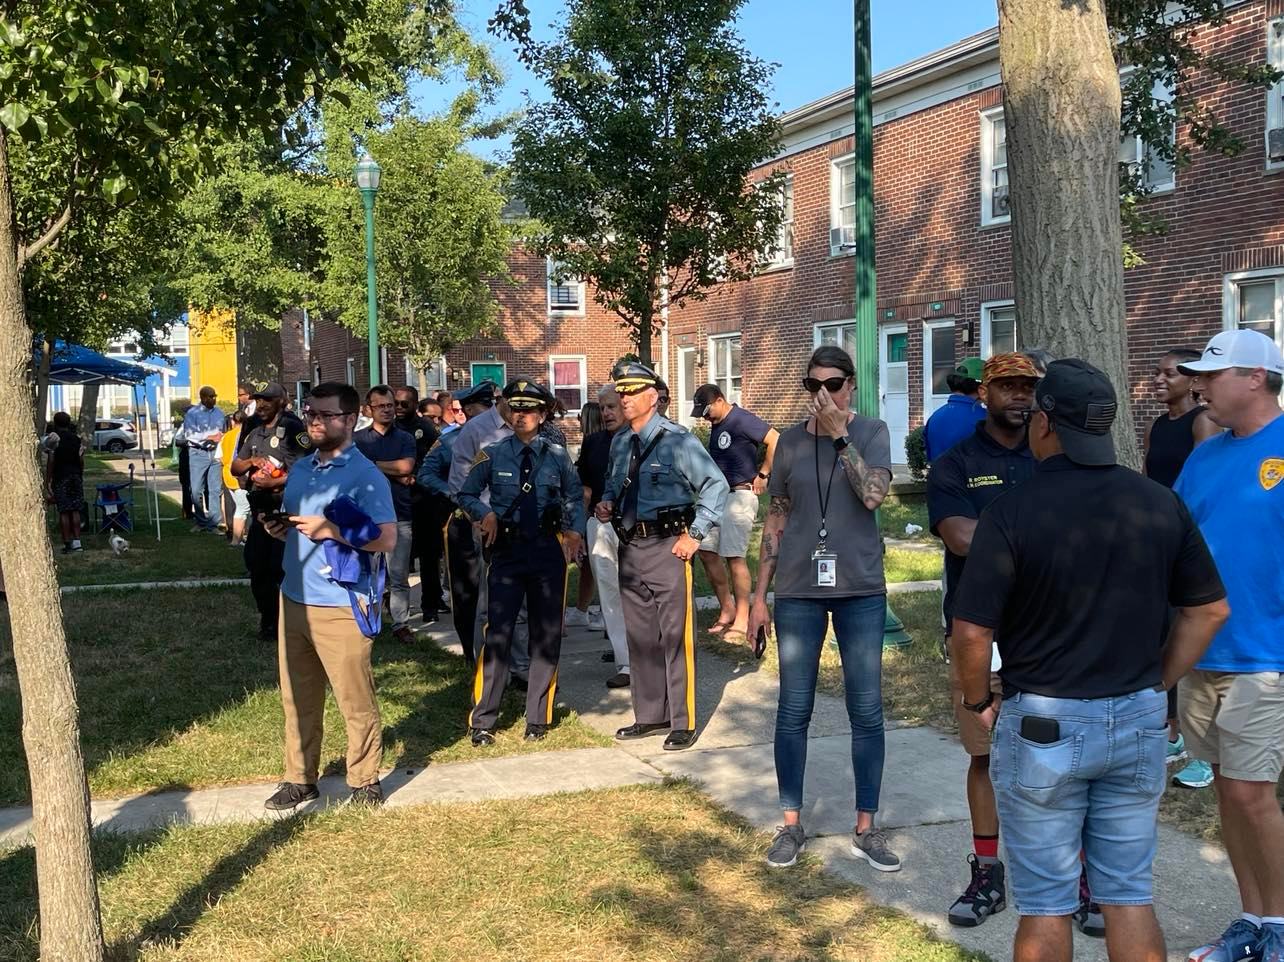 Law Enforcement, Civic Leaders Walk Neighborhoods to Promote Understanding